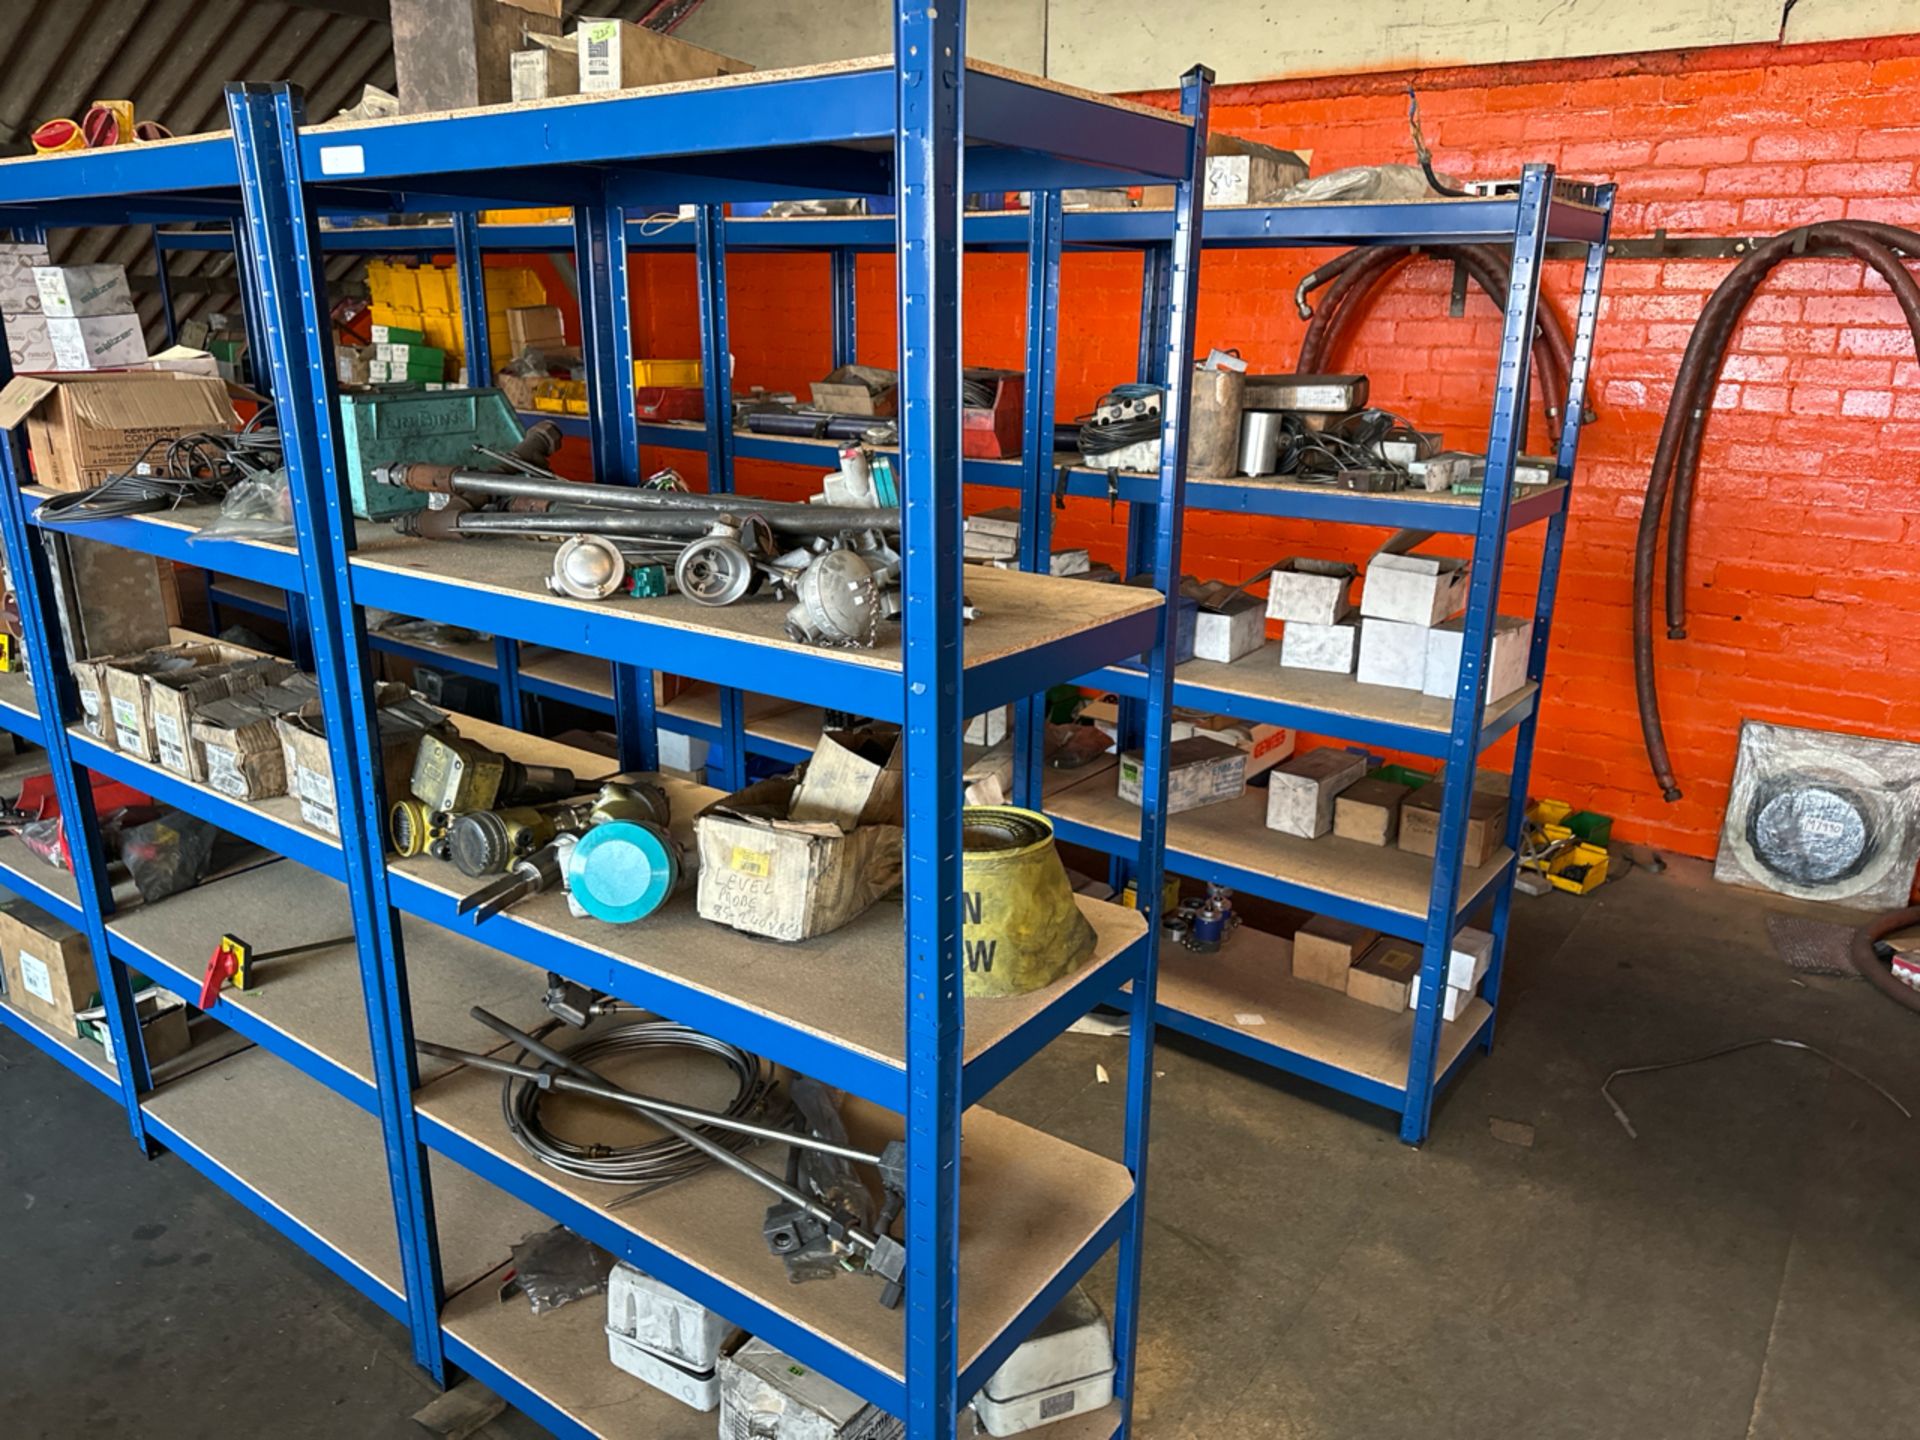 20 Blue Metal Shelving Units - Image 4 of 5